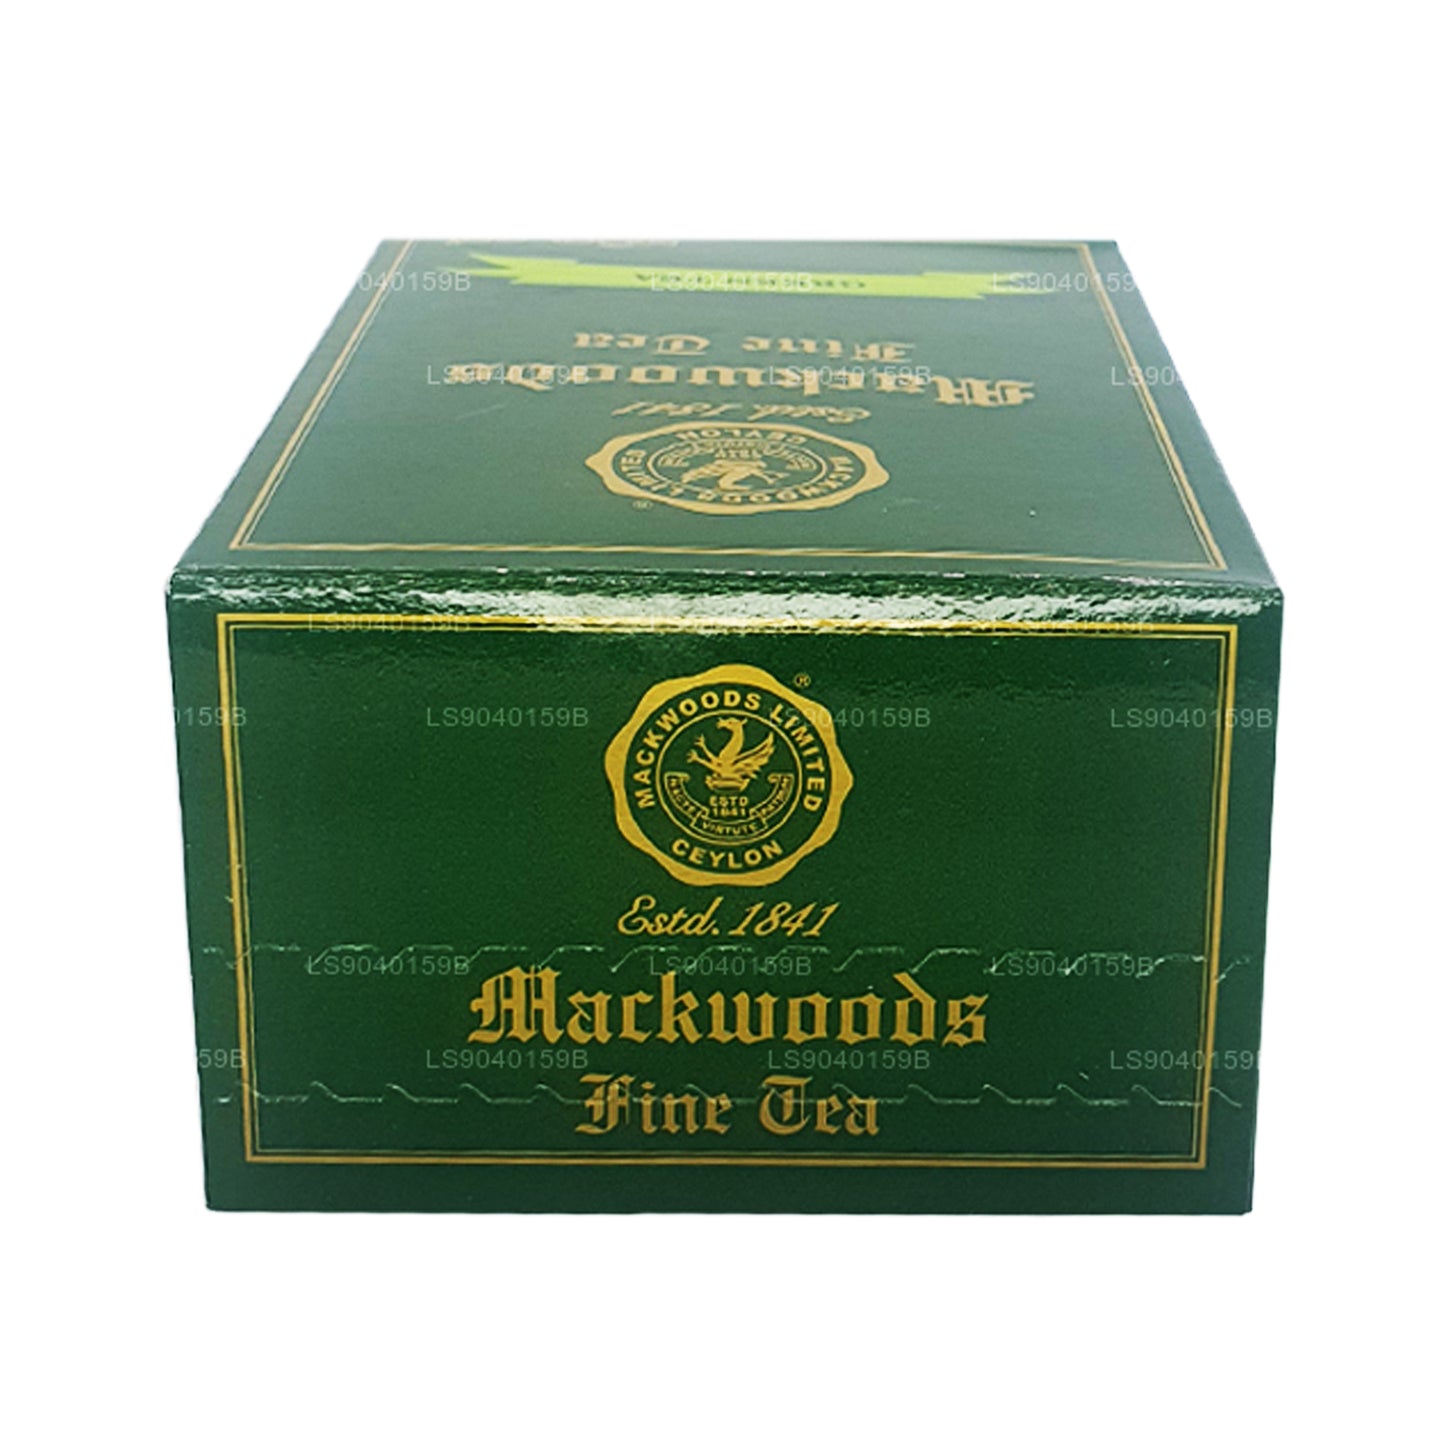 Mackwoods 散叶绿茶 (100g)